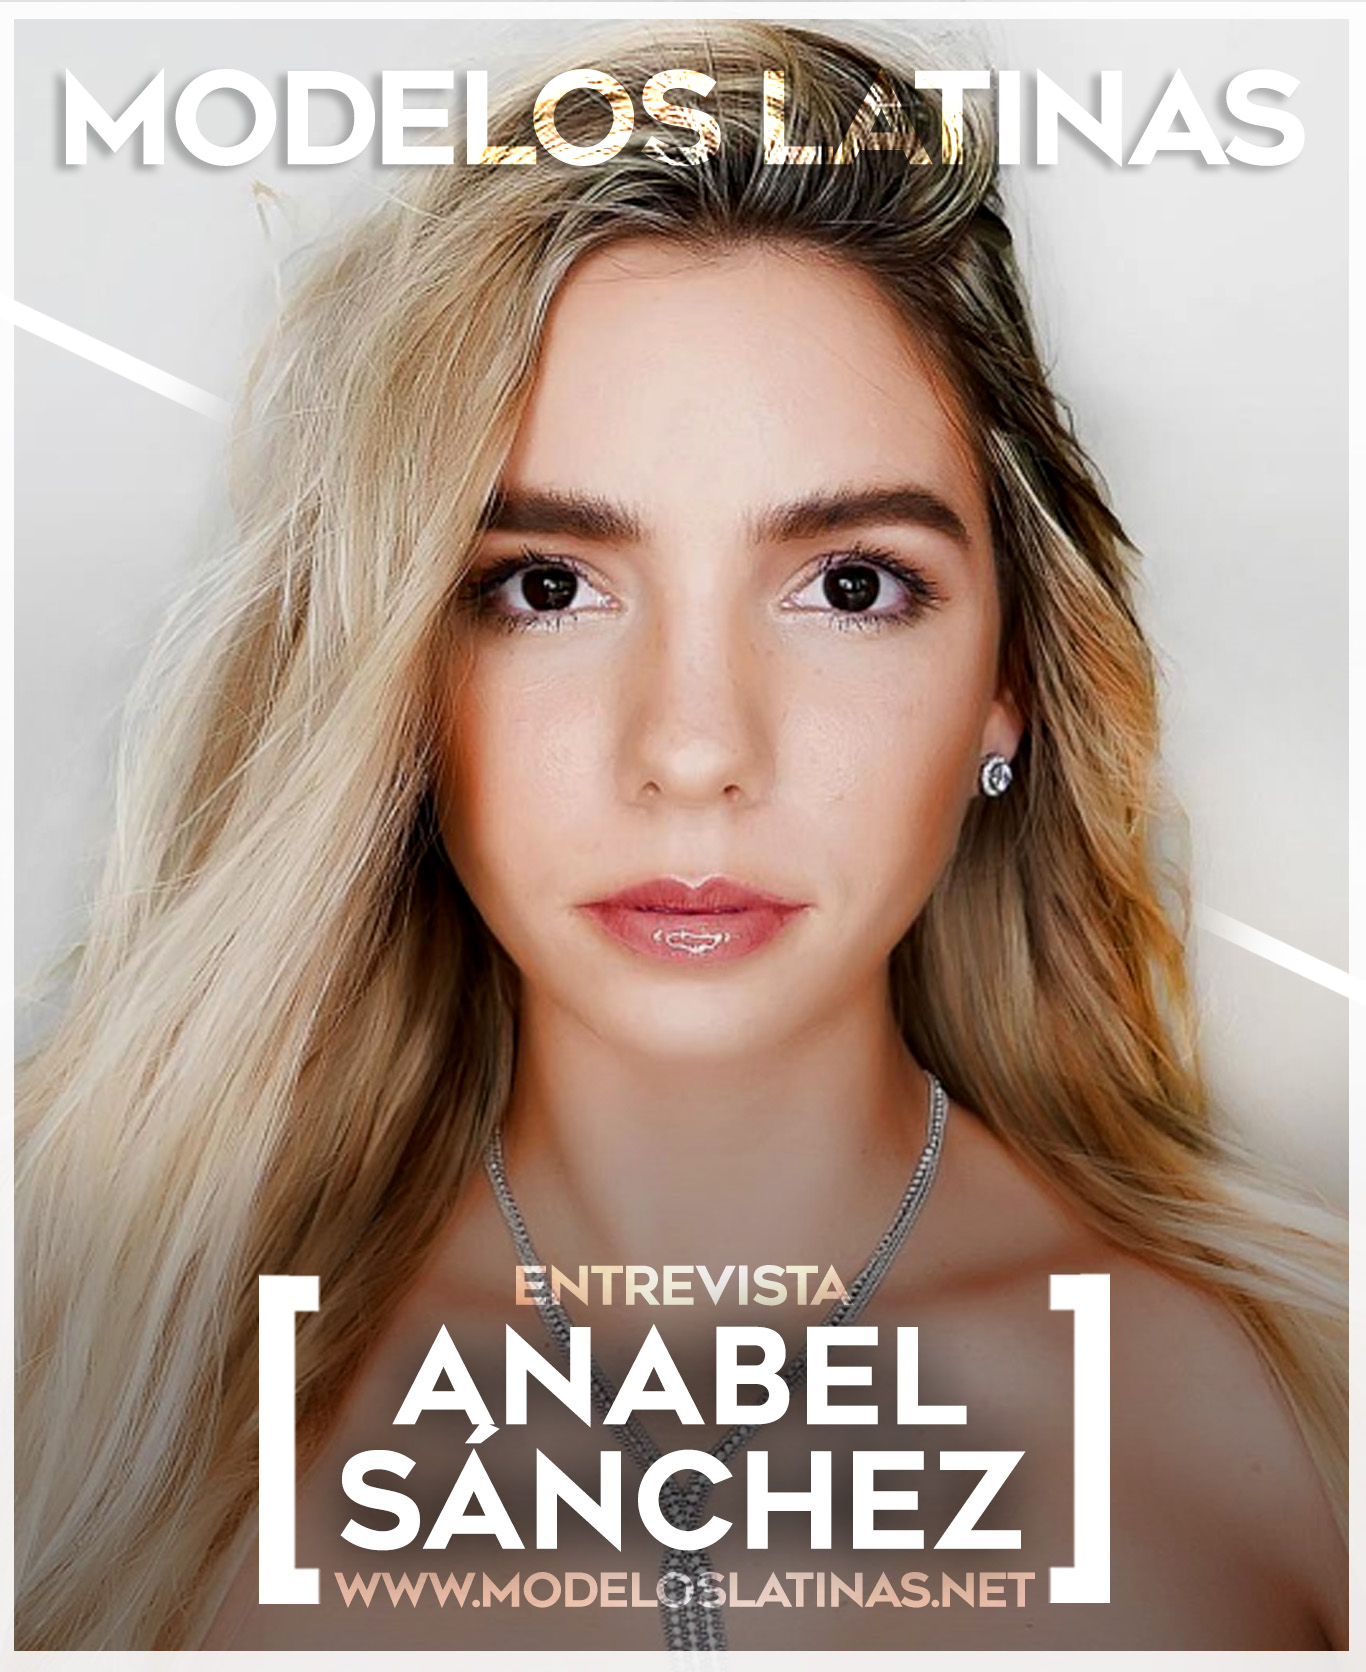 Anabel Sánchez: marketing manager experta al modelar